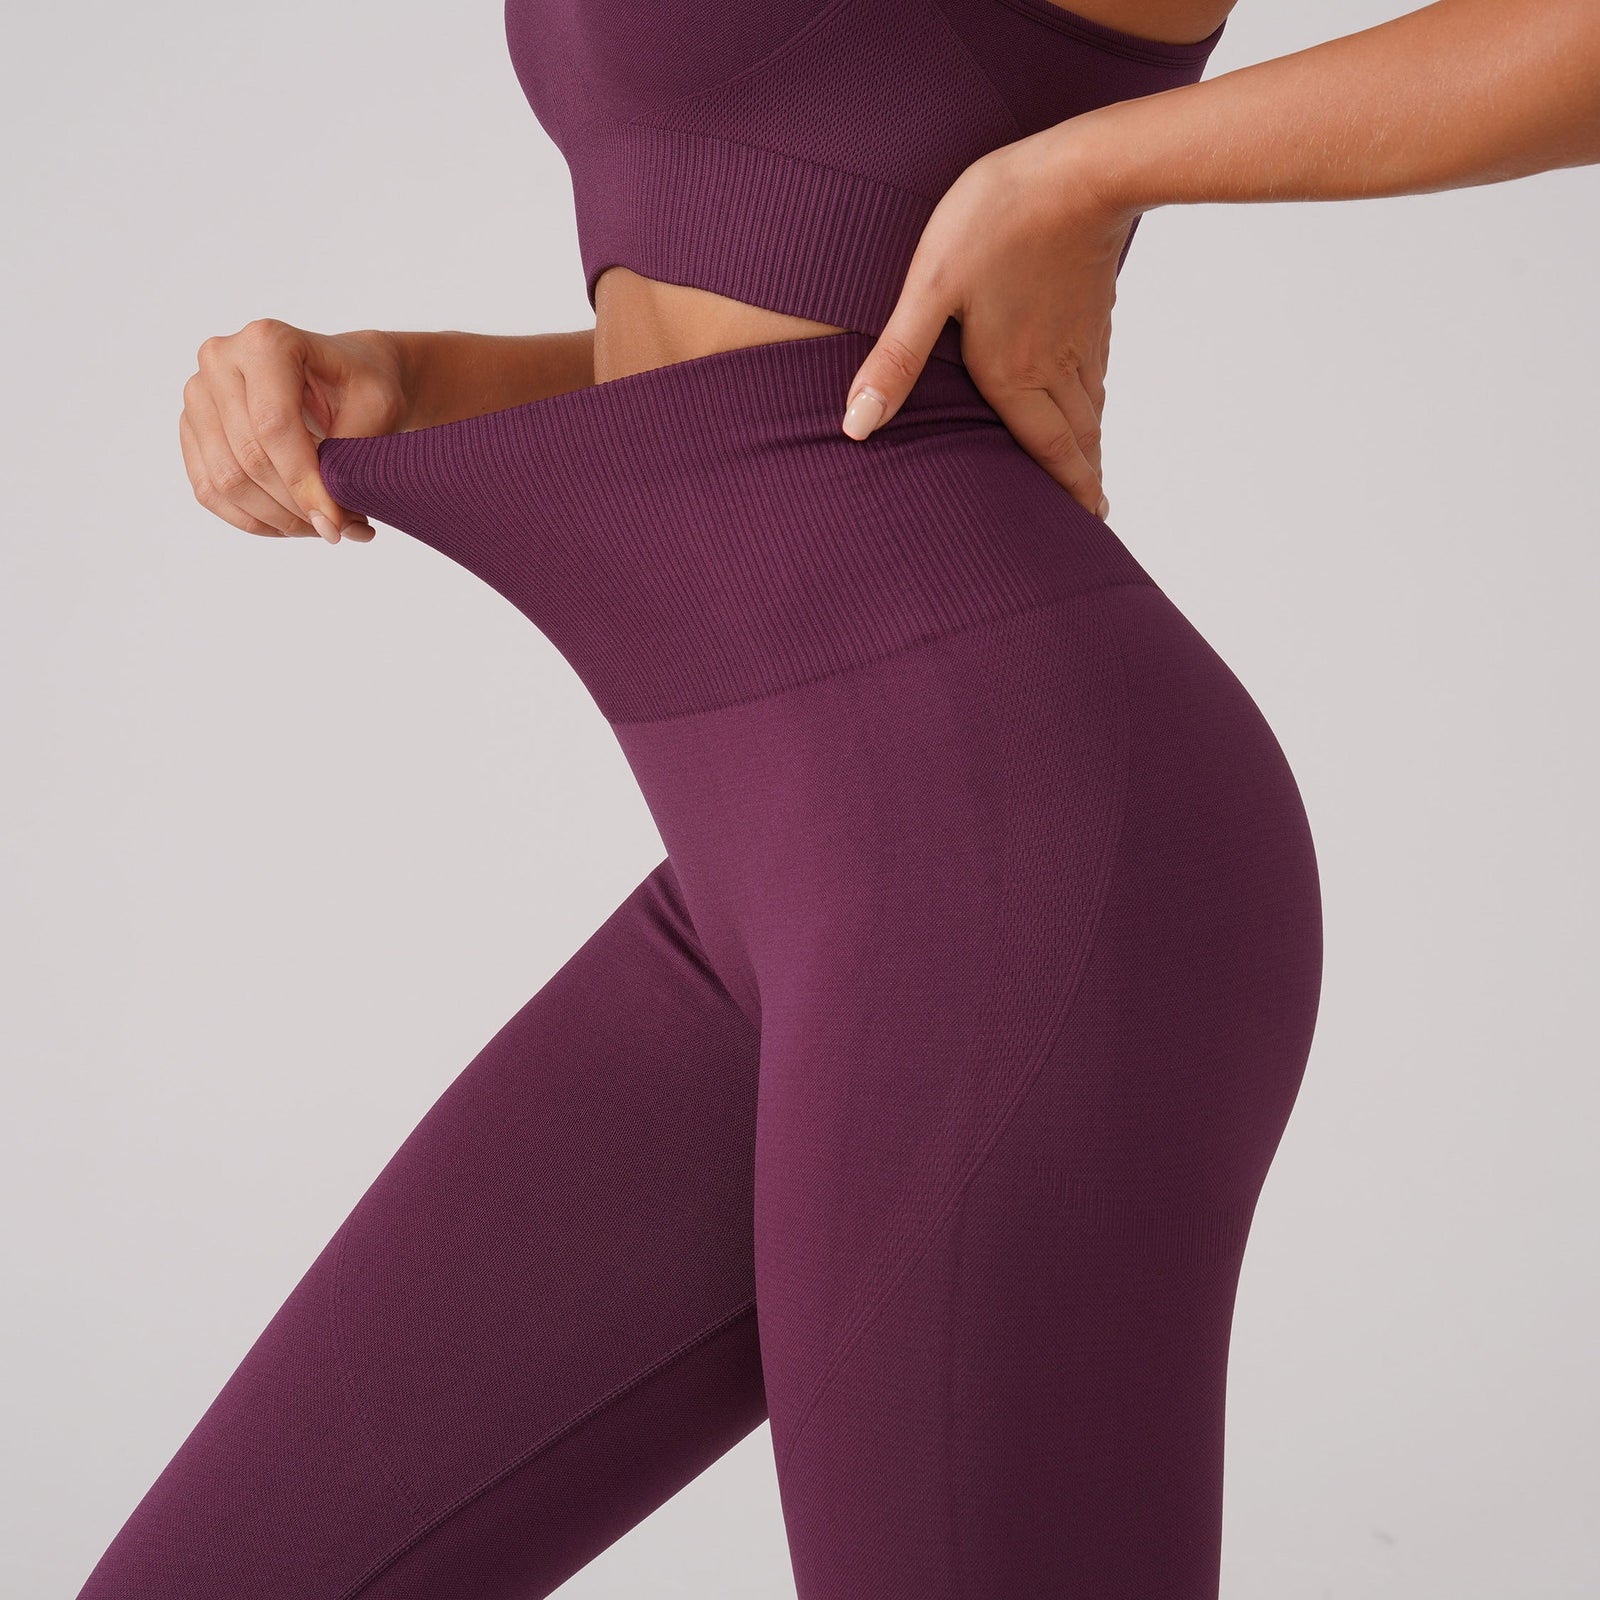 Seamless pure color Yoga Set Fitness Long Sleeve Crop Top Sexy Bra High Waist Leggings Women Workout Sportswear Lounge Clothing